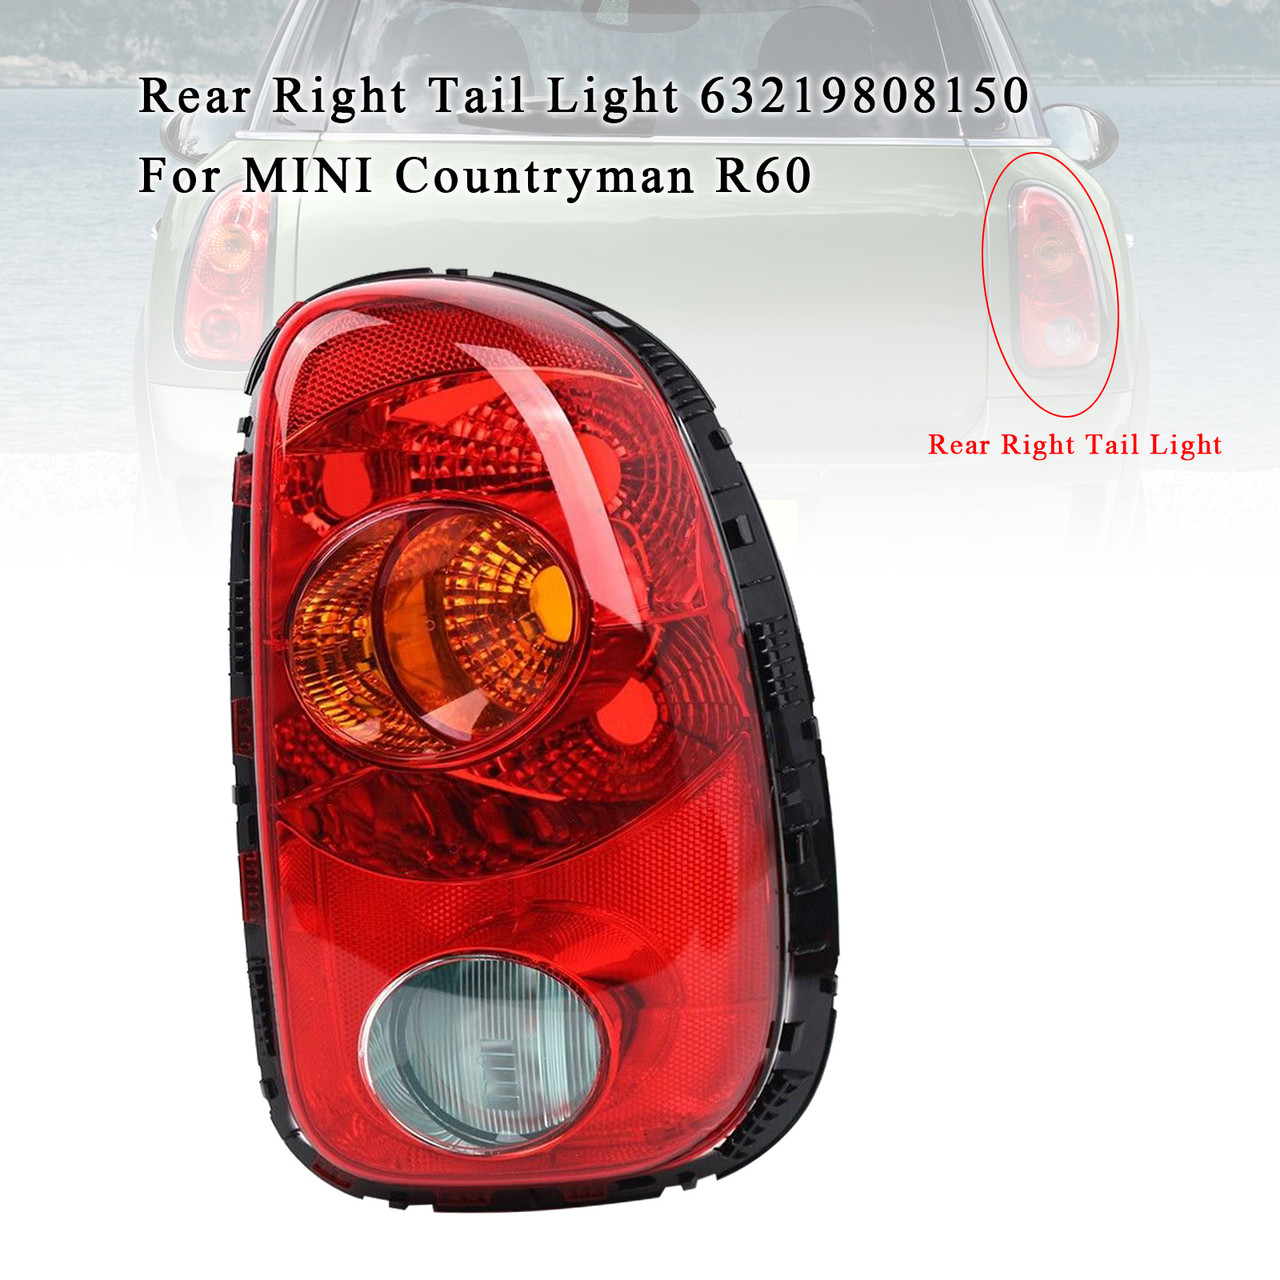 Rear Right Tail Light 63219808150 For MINI Countryman R60